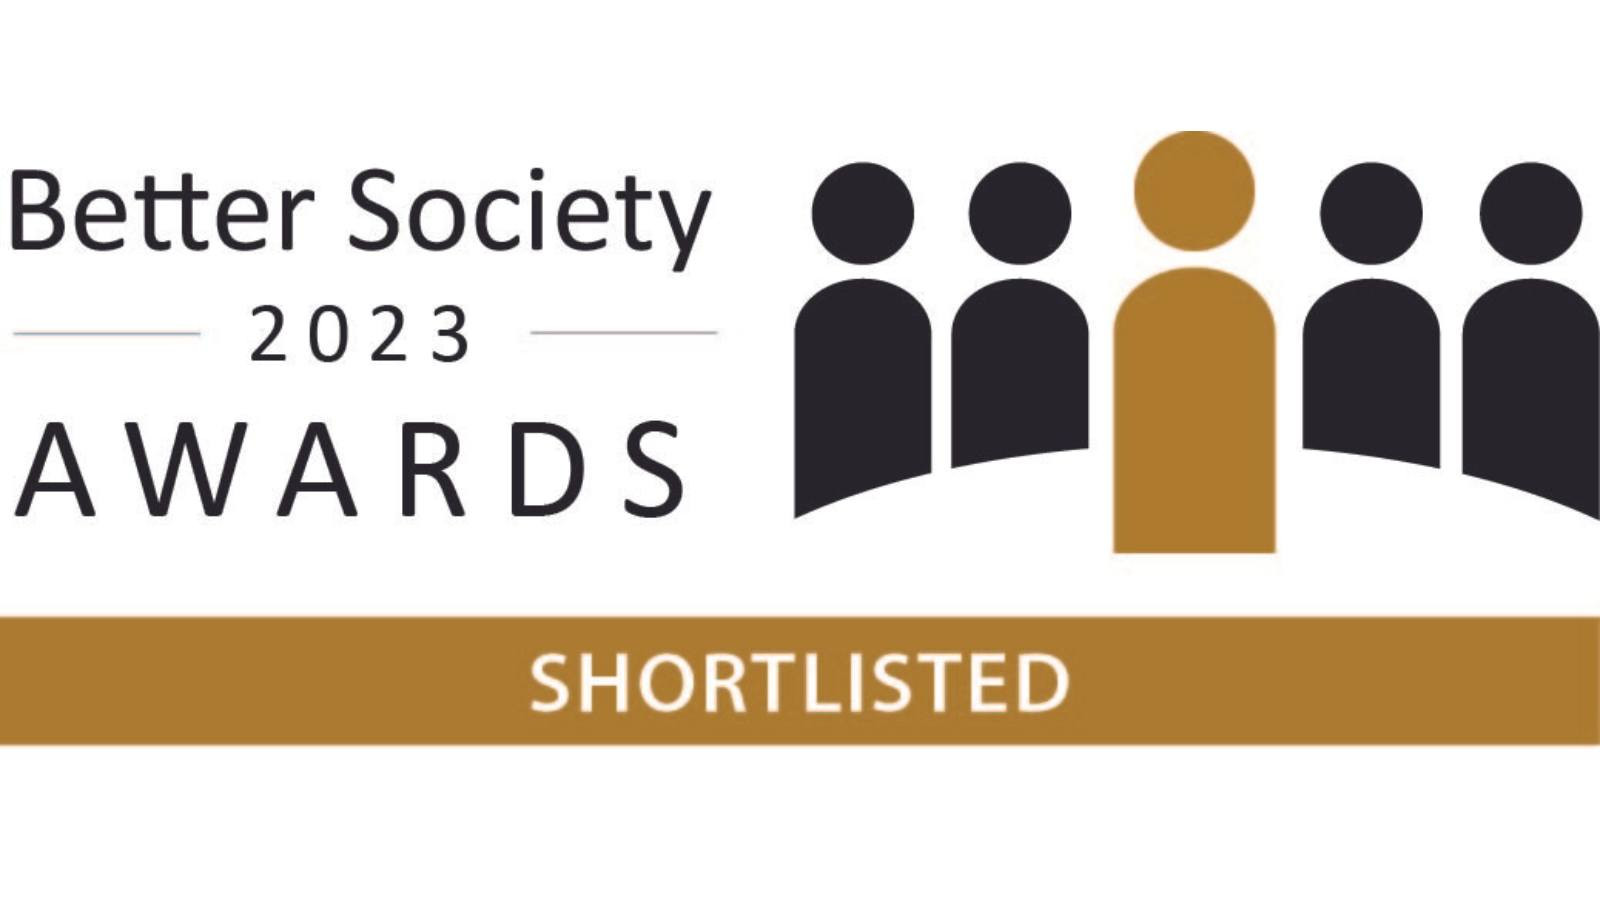 Better Society Awards Shortlisted 2023